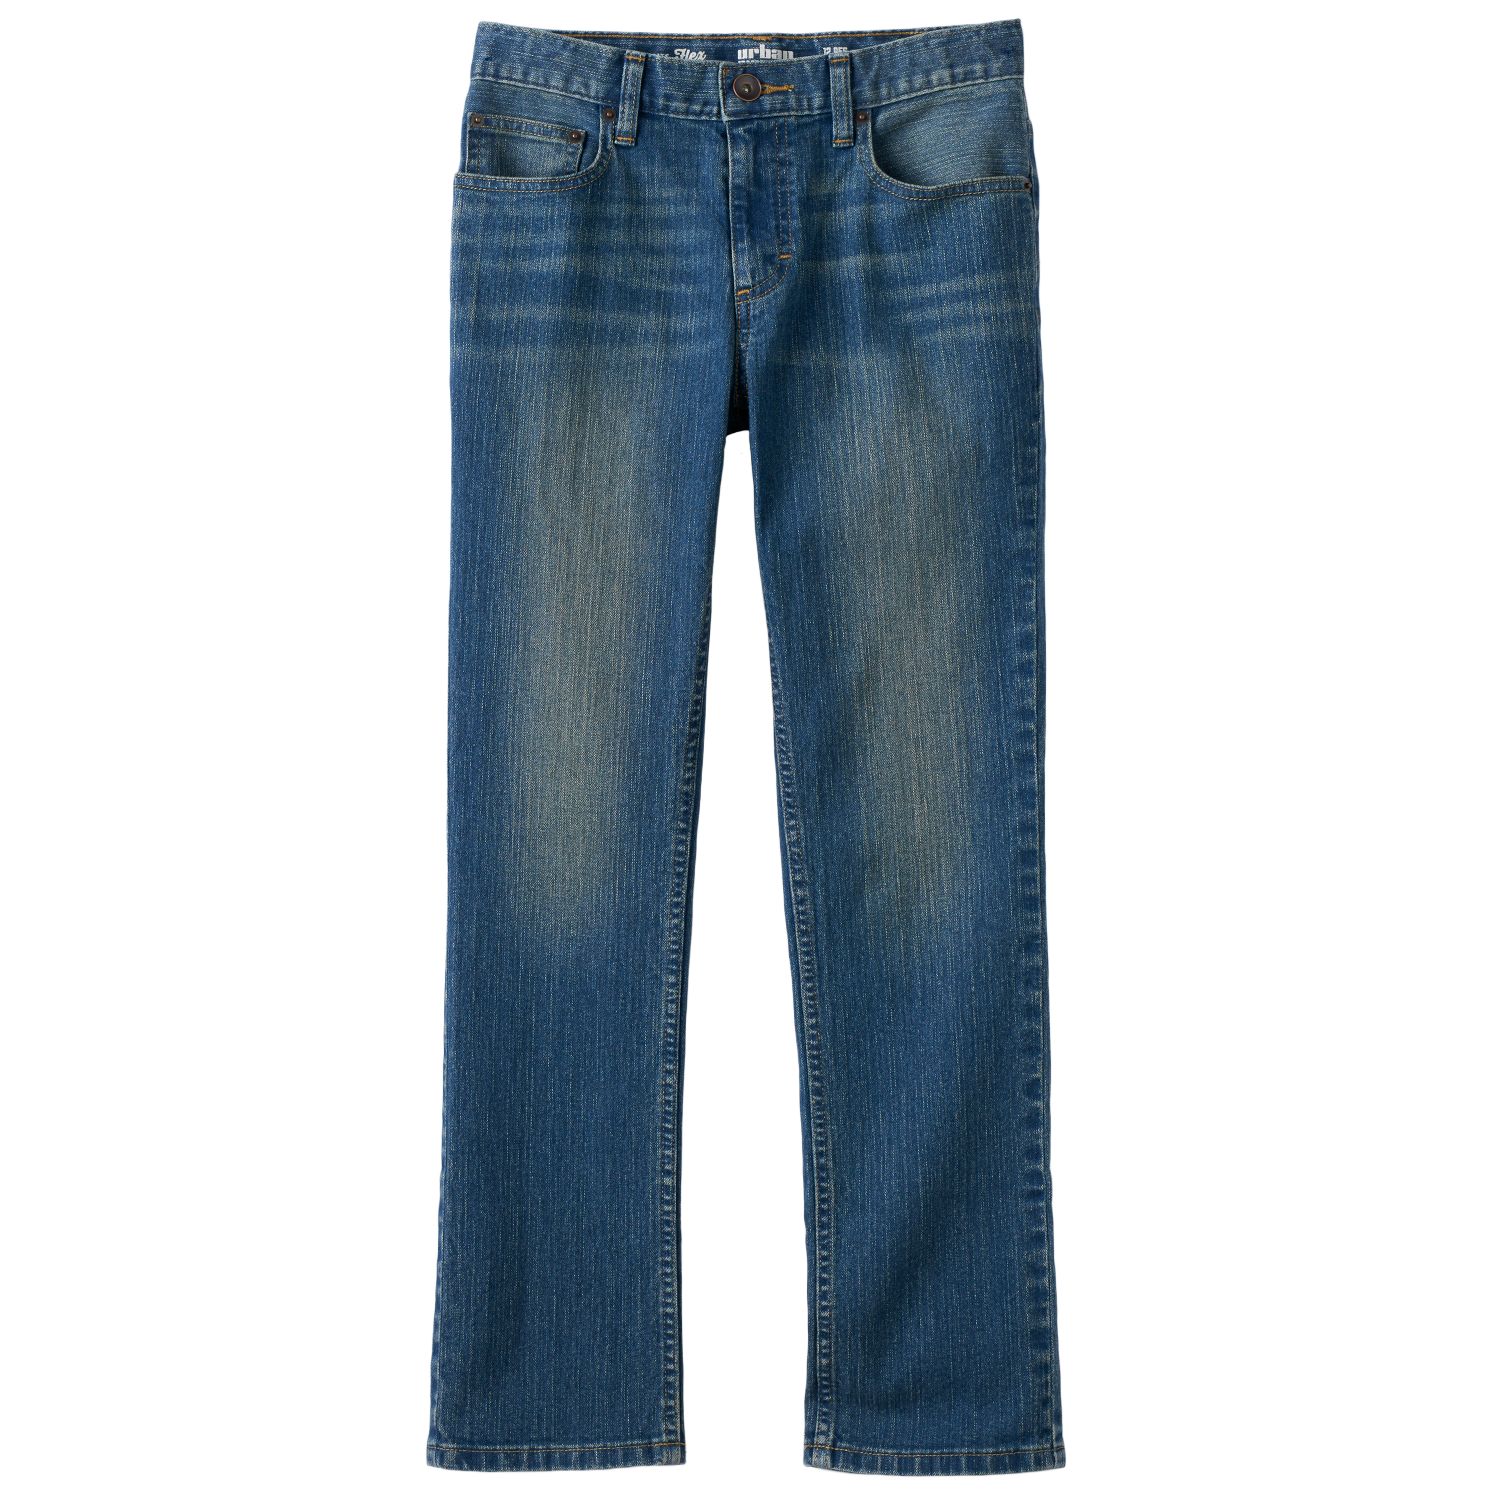 wrangler jeans 40 x 36